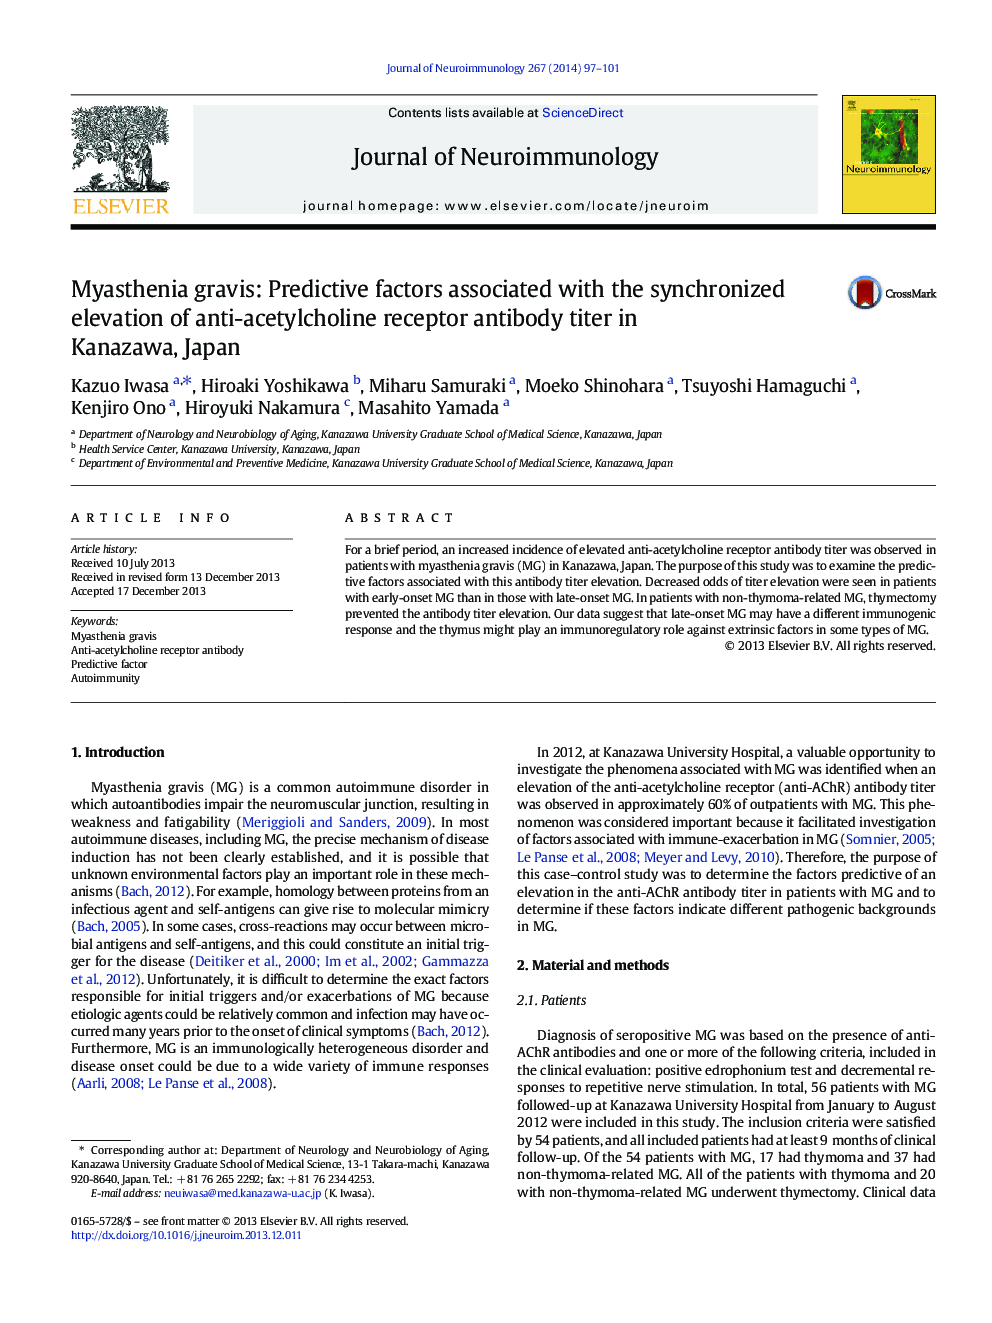 Myasthenia gravis: Predictive factors associated with the synchronized elevation of anti-acetylcholine receptor antibody titer in Kanazawa, Japan